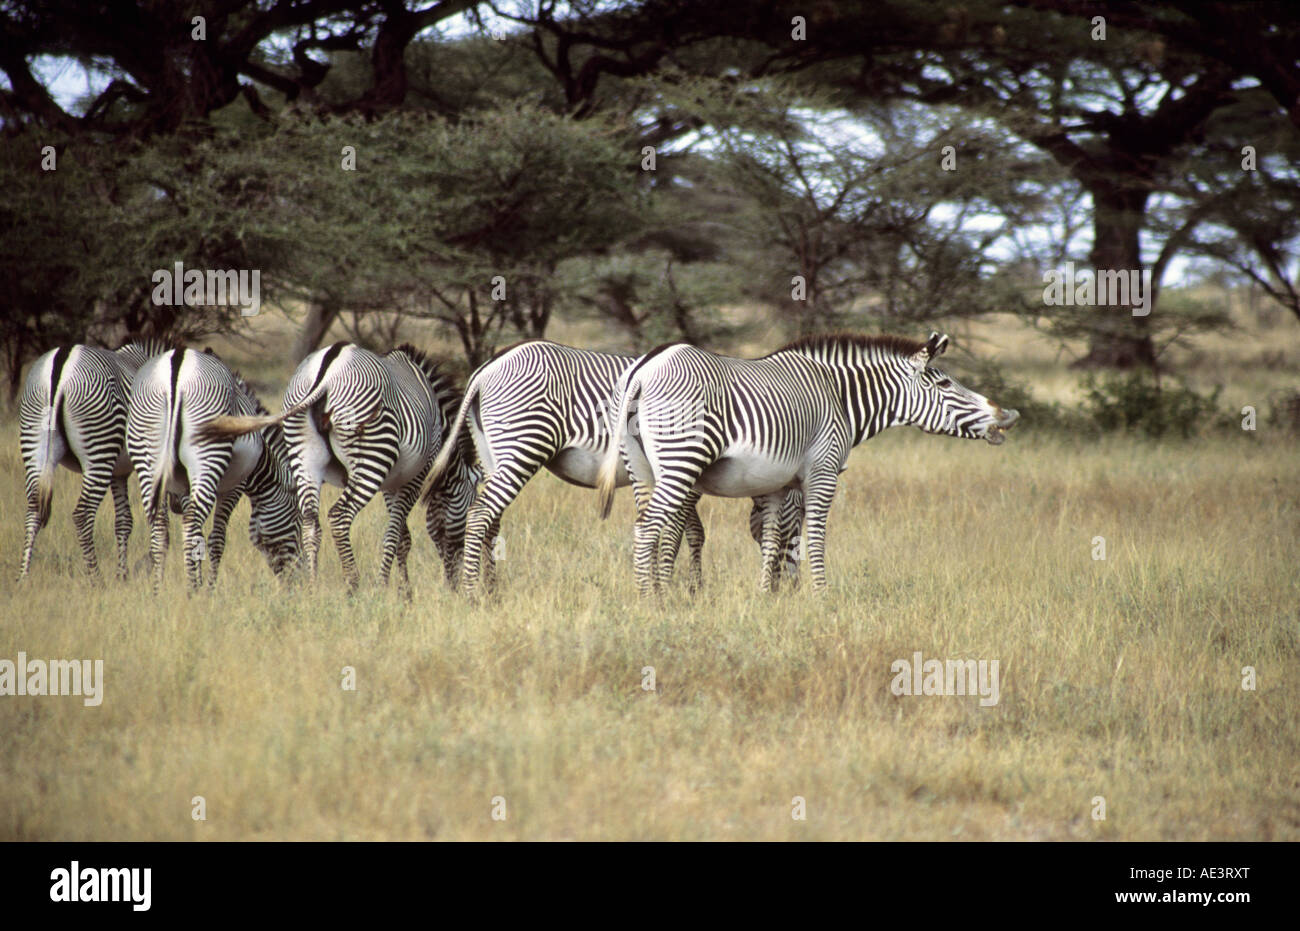 Grevy's Zebras (Equus grevyi) in Shaba National Park, Kenya, an area of arid region. Stock Photo